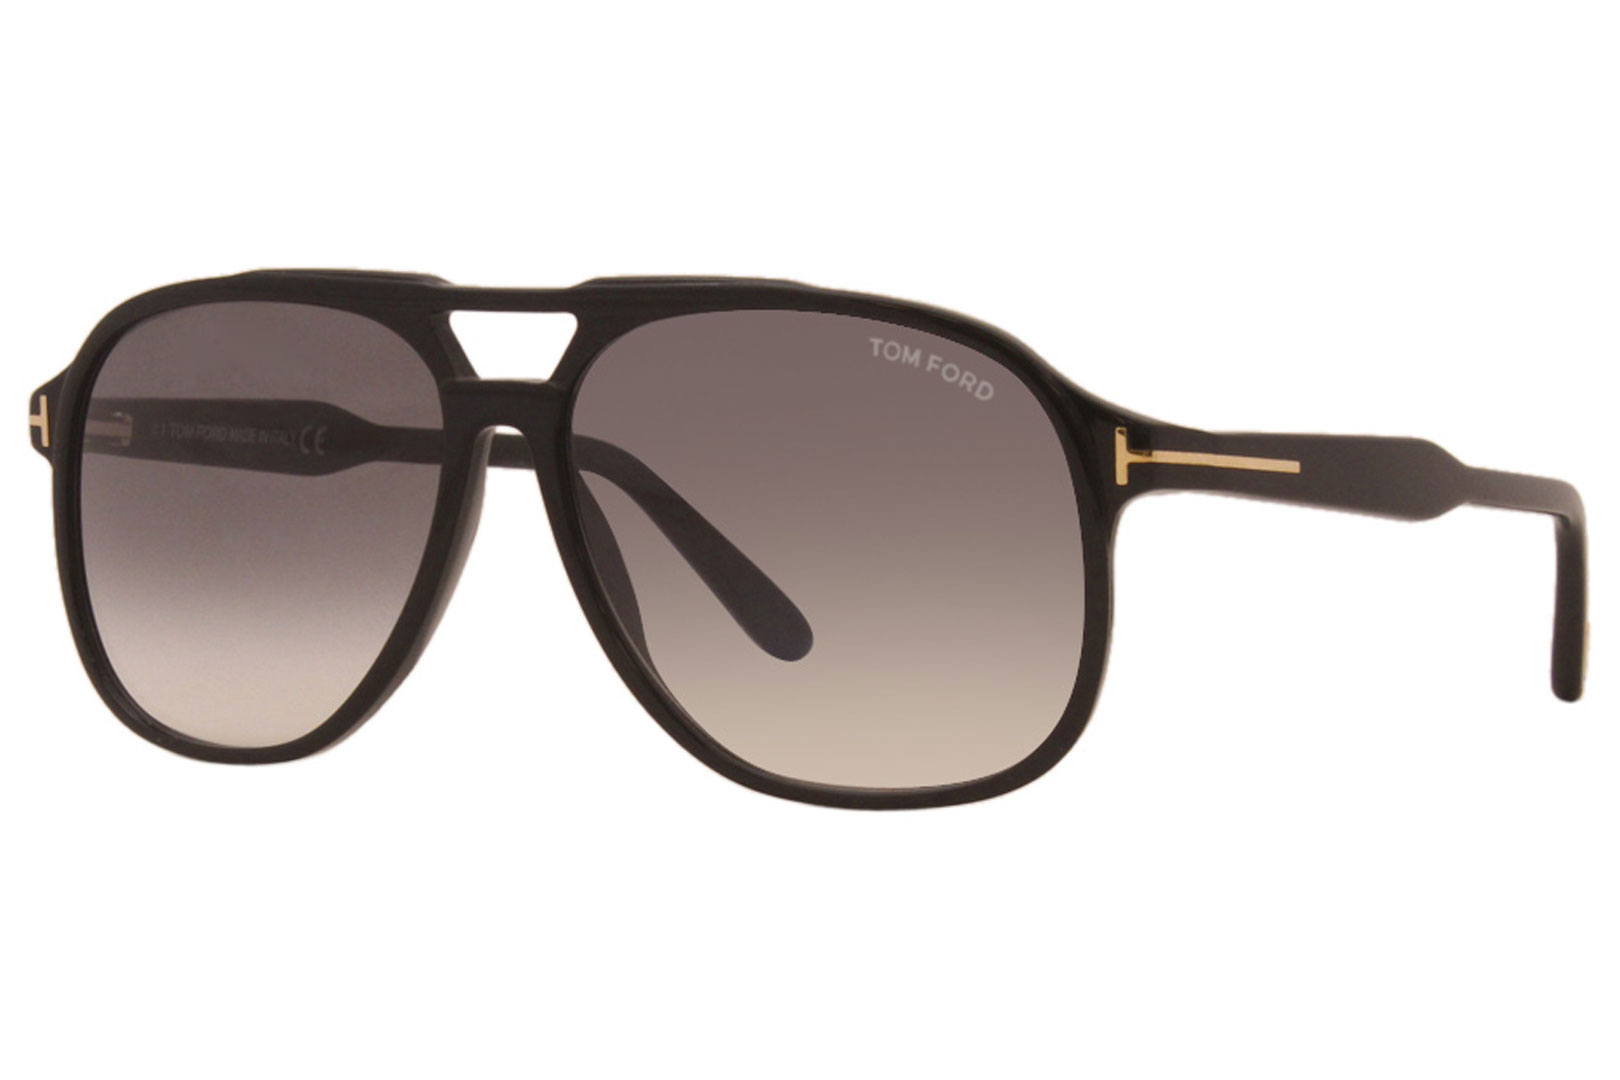 Tom Ford Raoul TF753 Sunglasses Men's Pilot | EyeSpecs.com